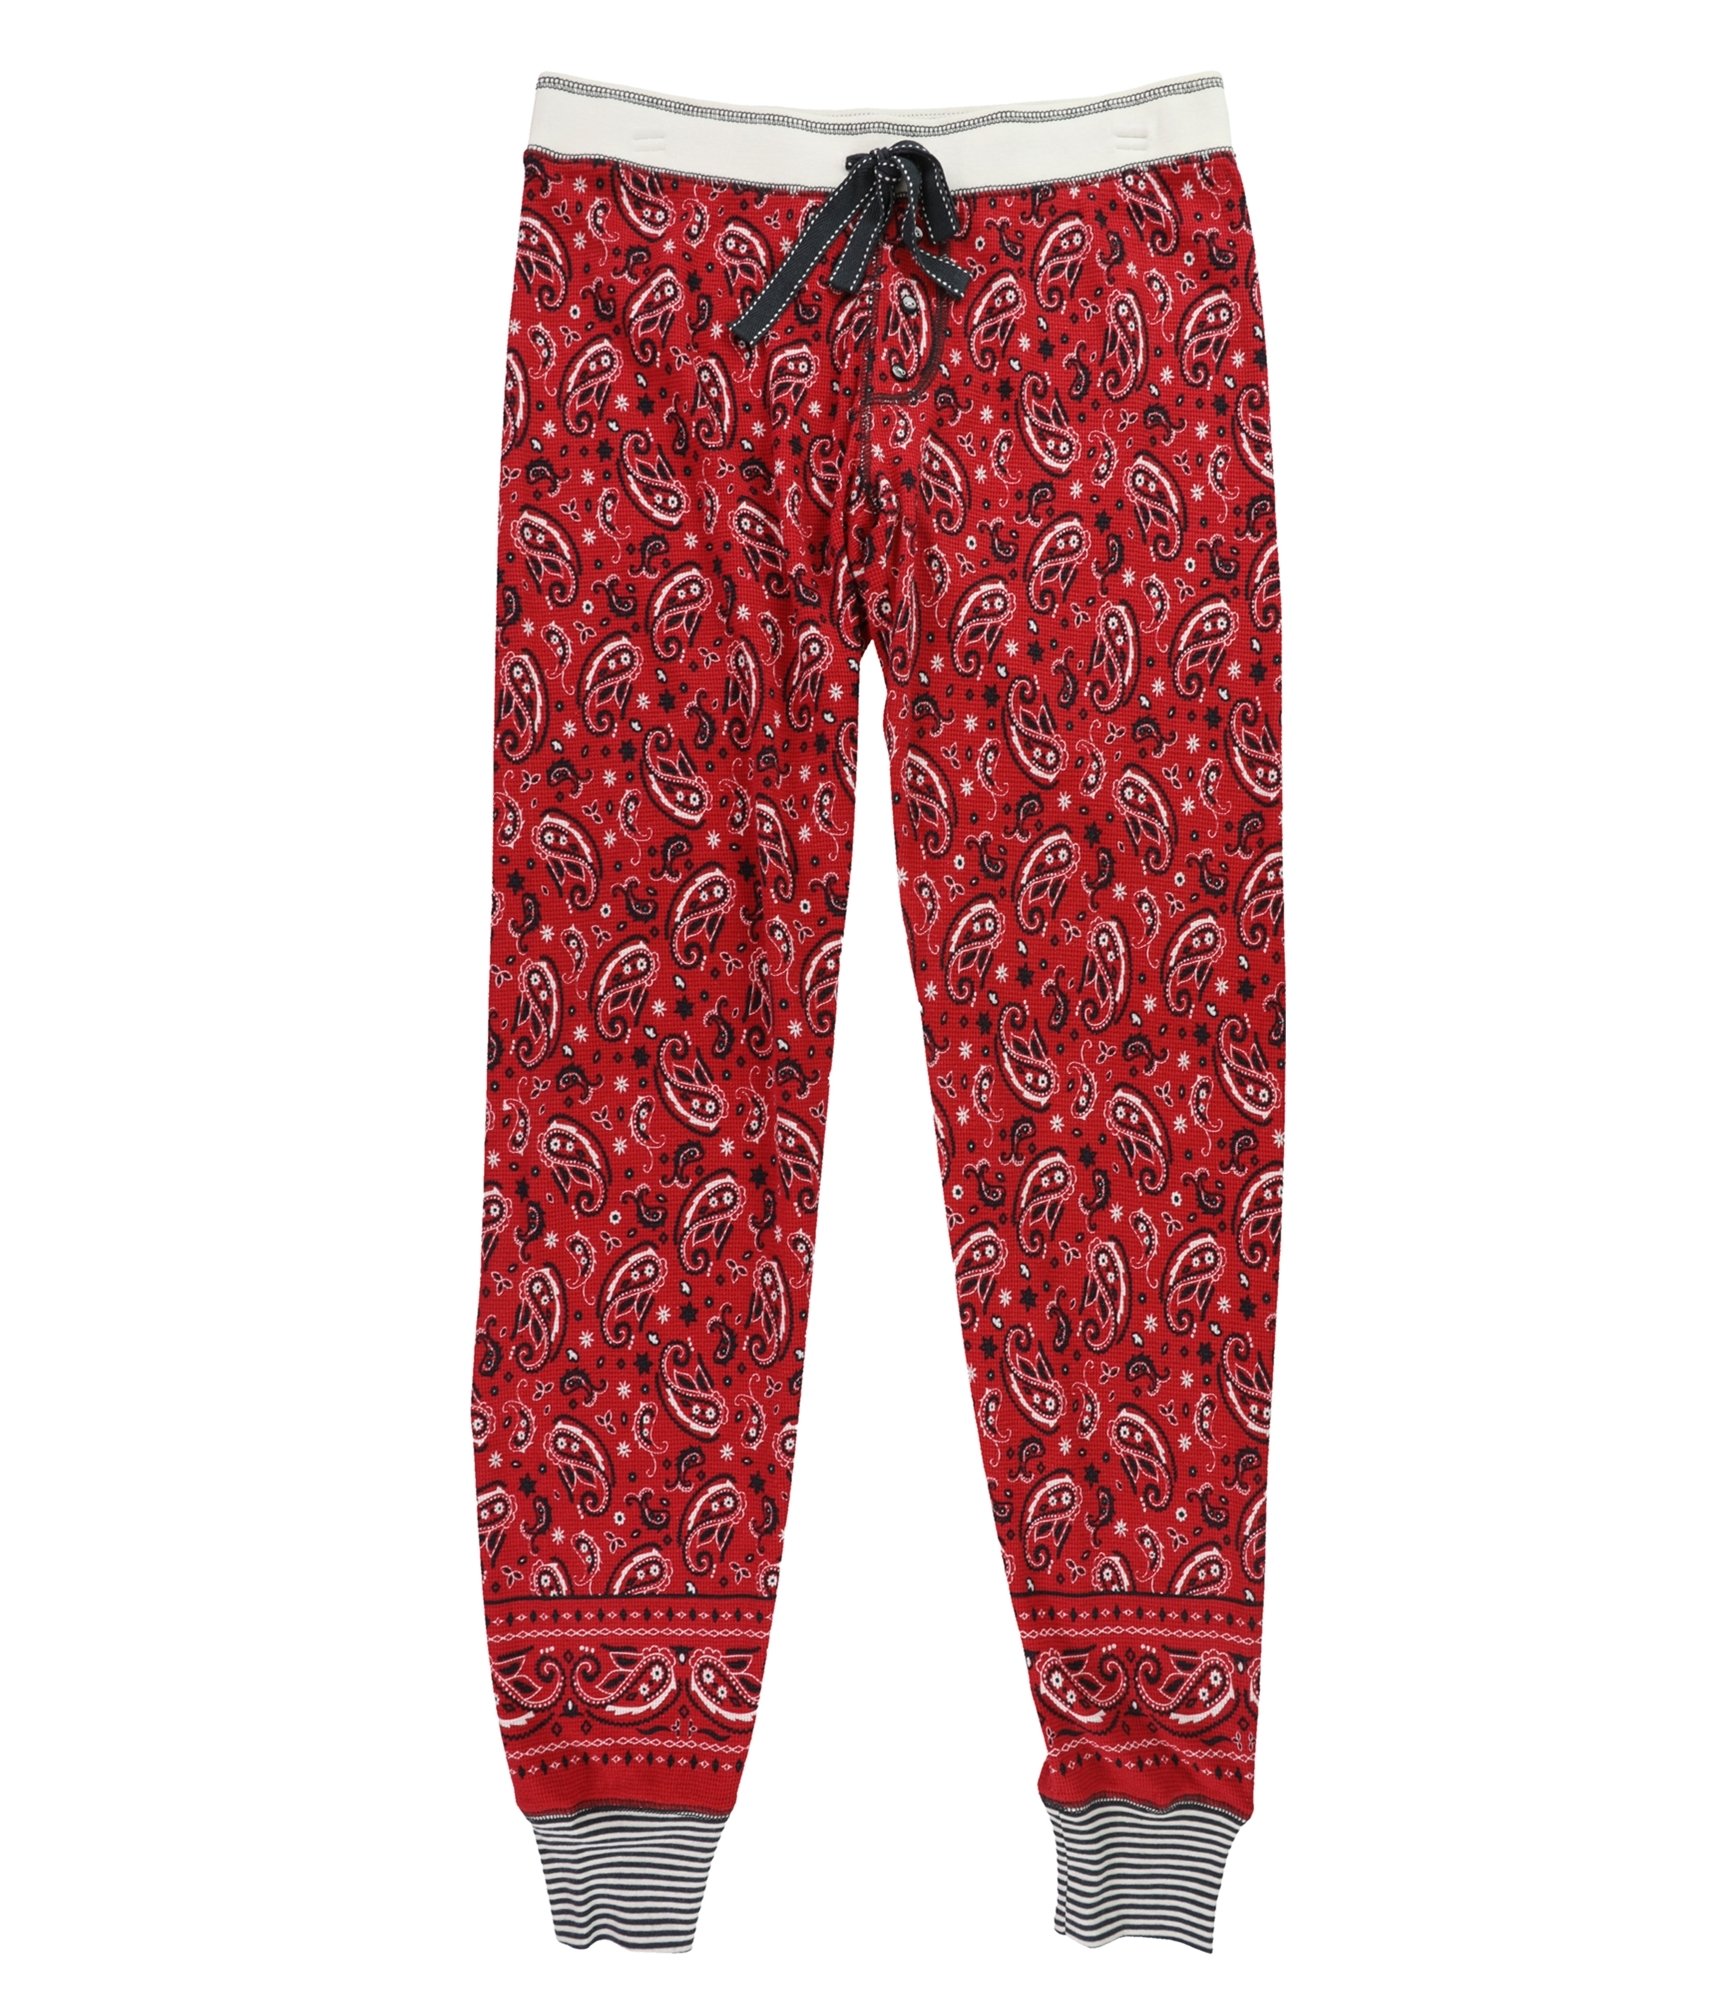 Female Louisville Cardinals Pajamas, Sweatpants & Loungewear in